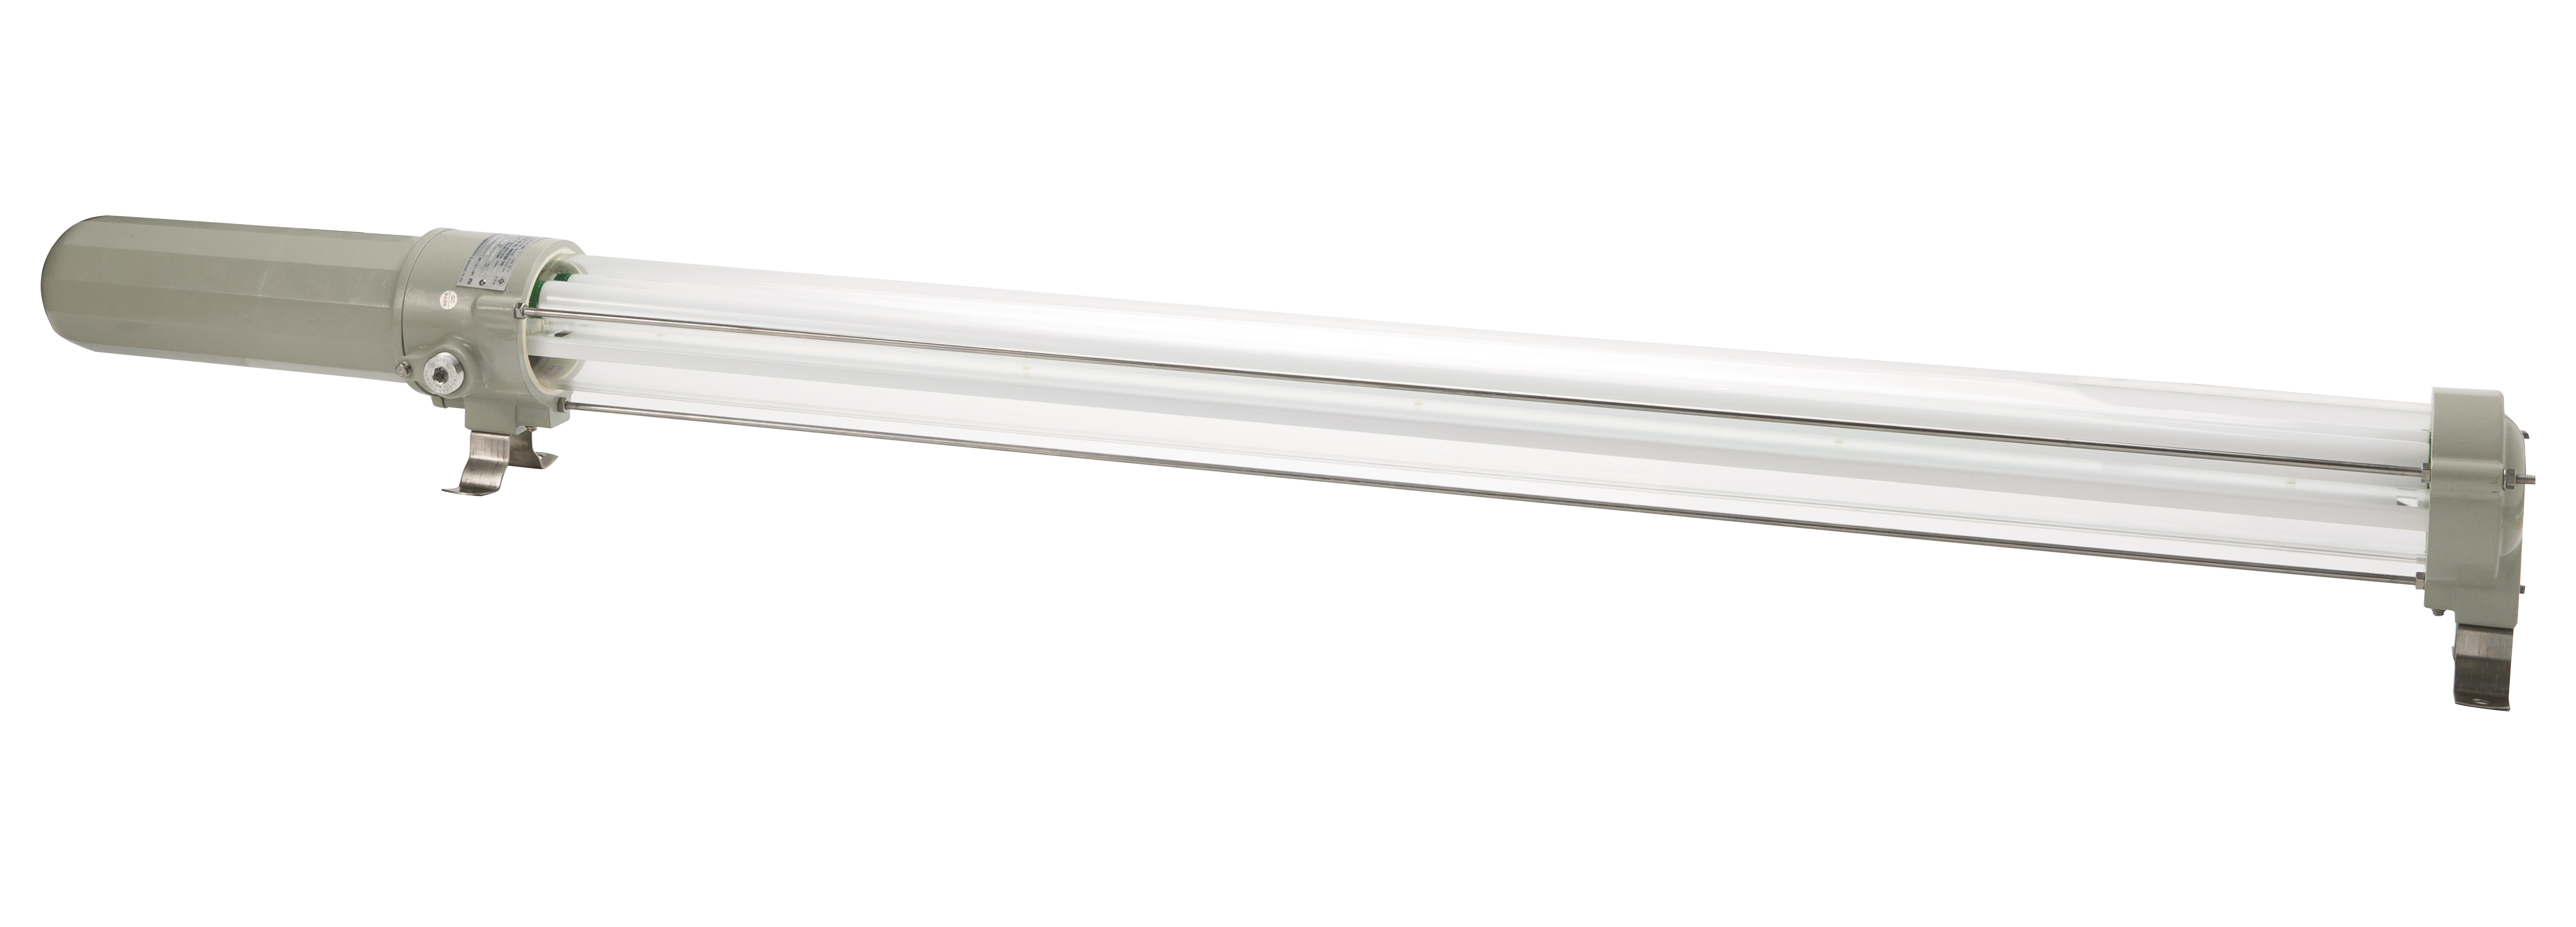 Fluorescent & LED Tube Lighting Fixture, DFP-C Series (Capsule end cap)